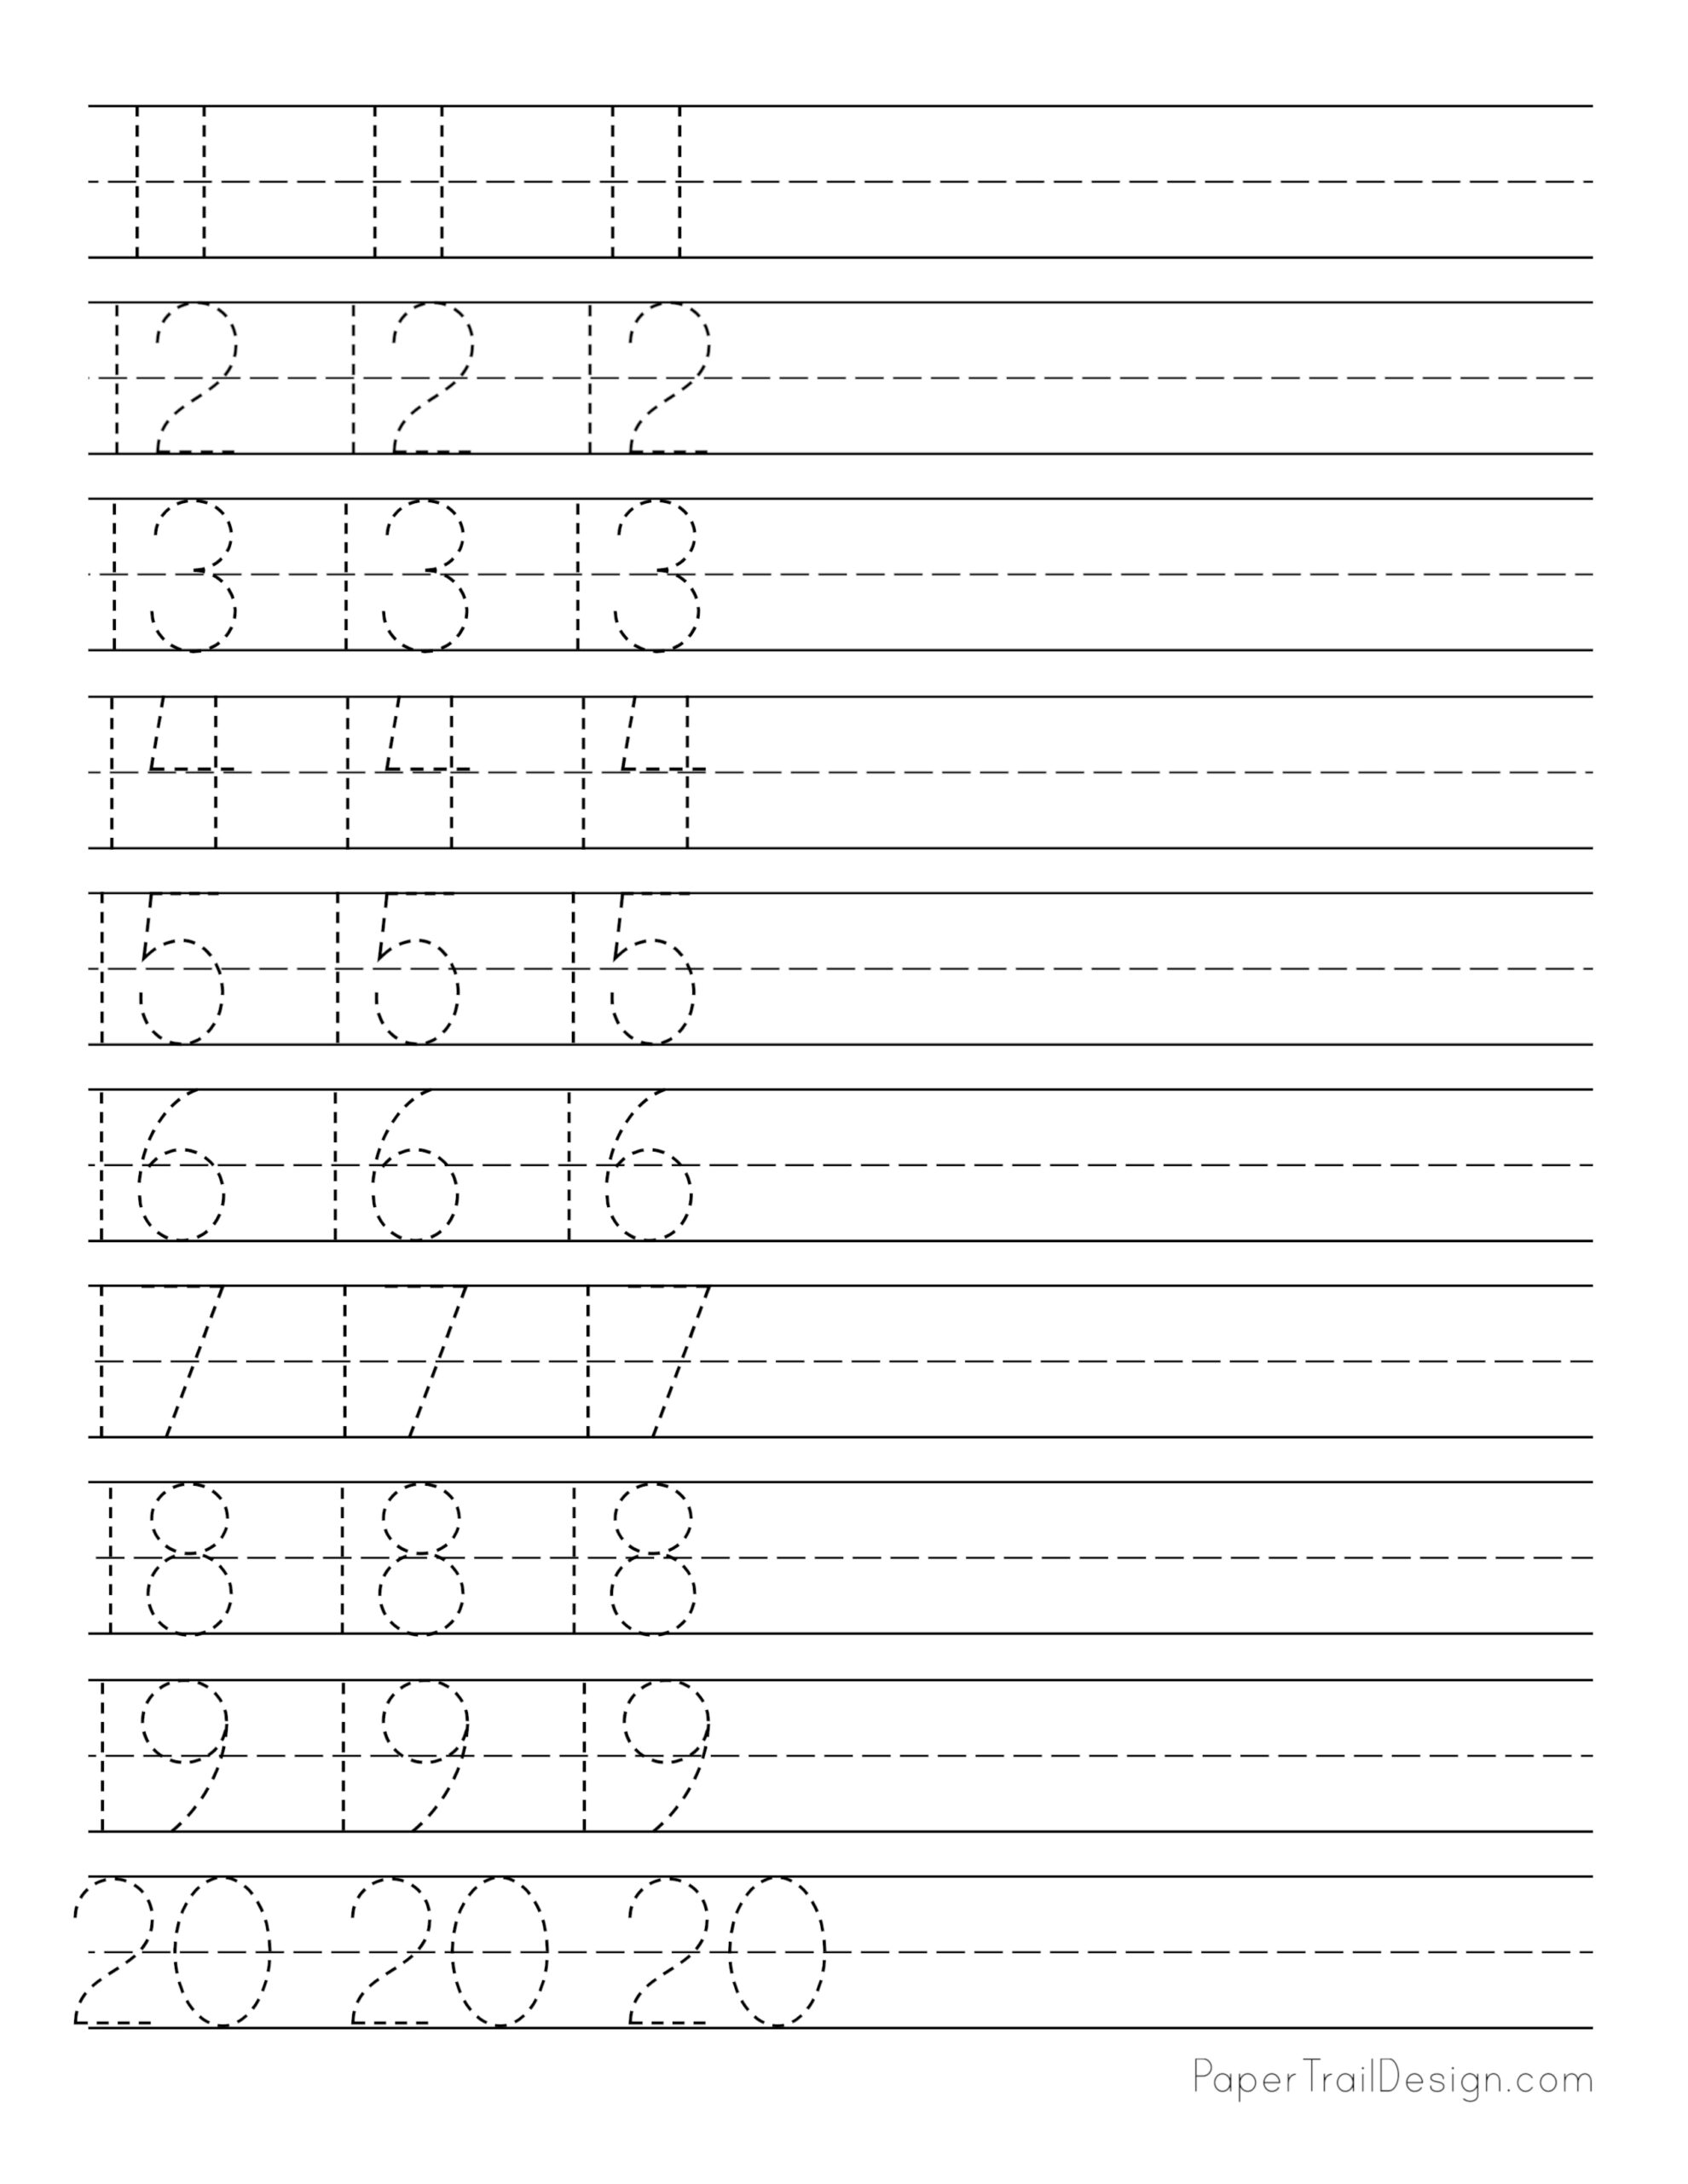 free-printable-tracing-numbers-11-20-worksheets-printable-templates